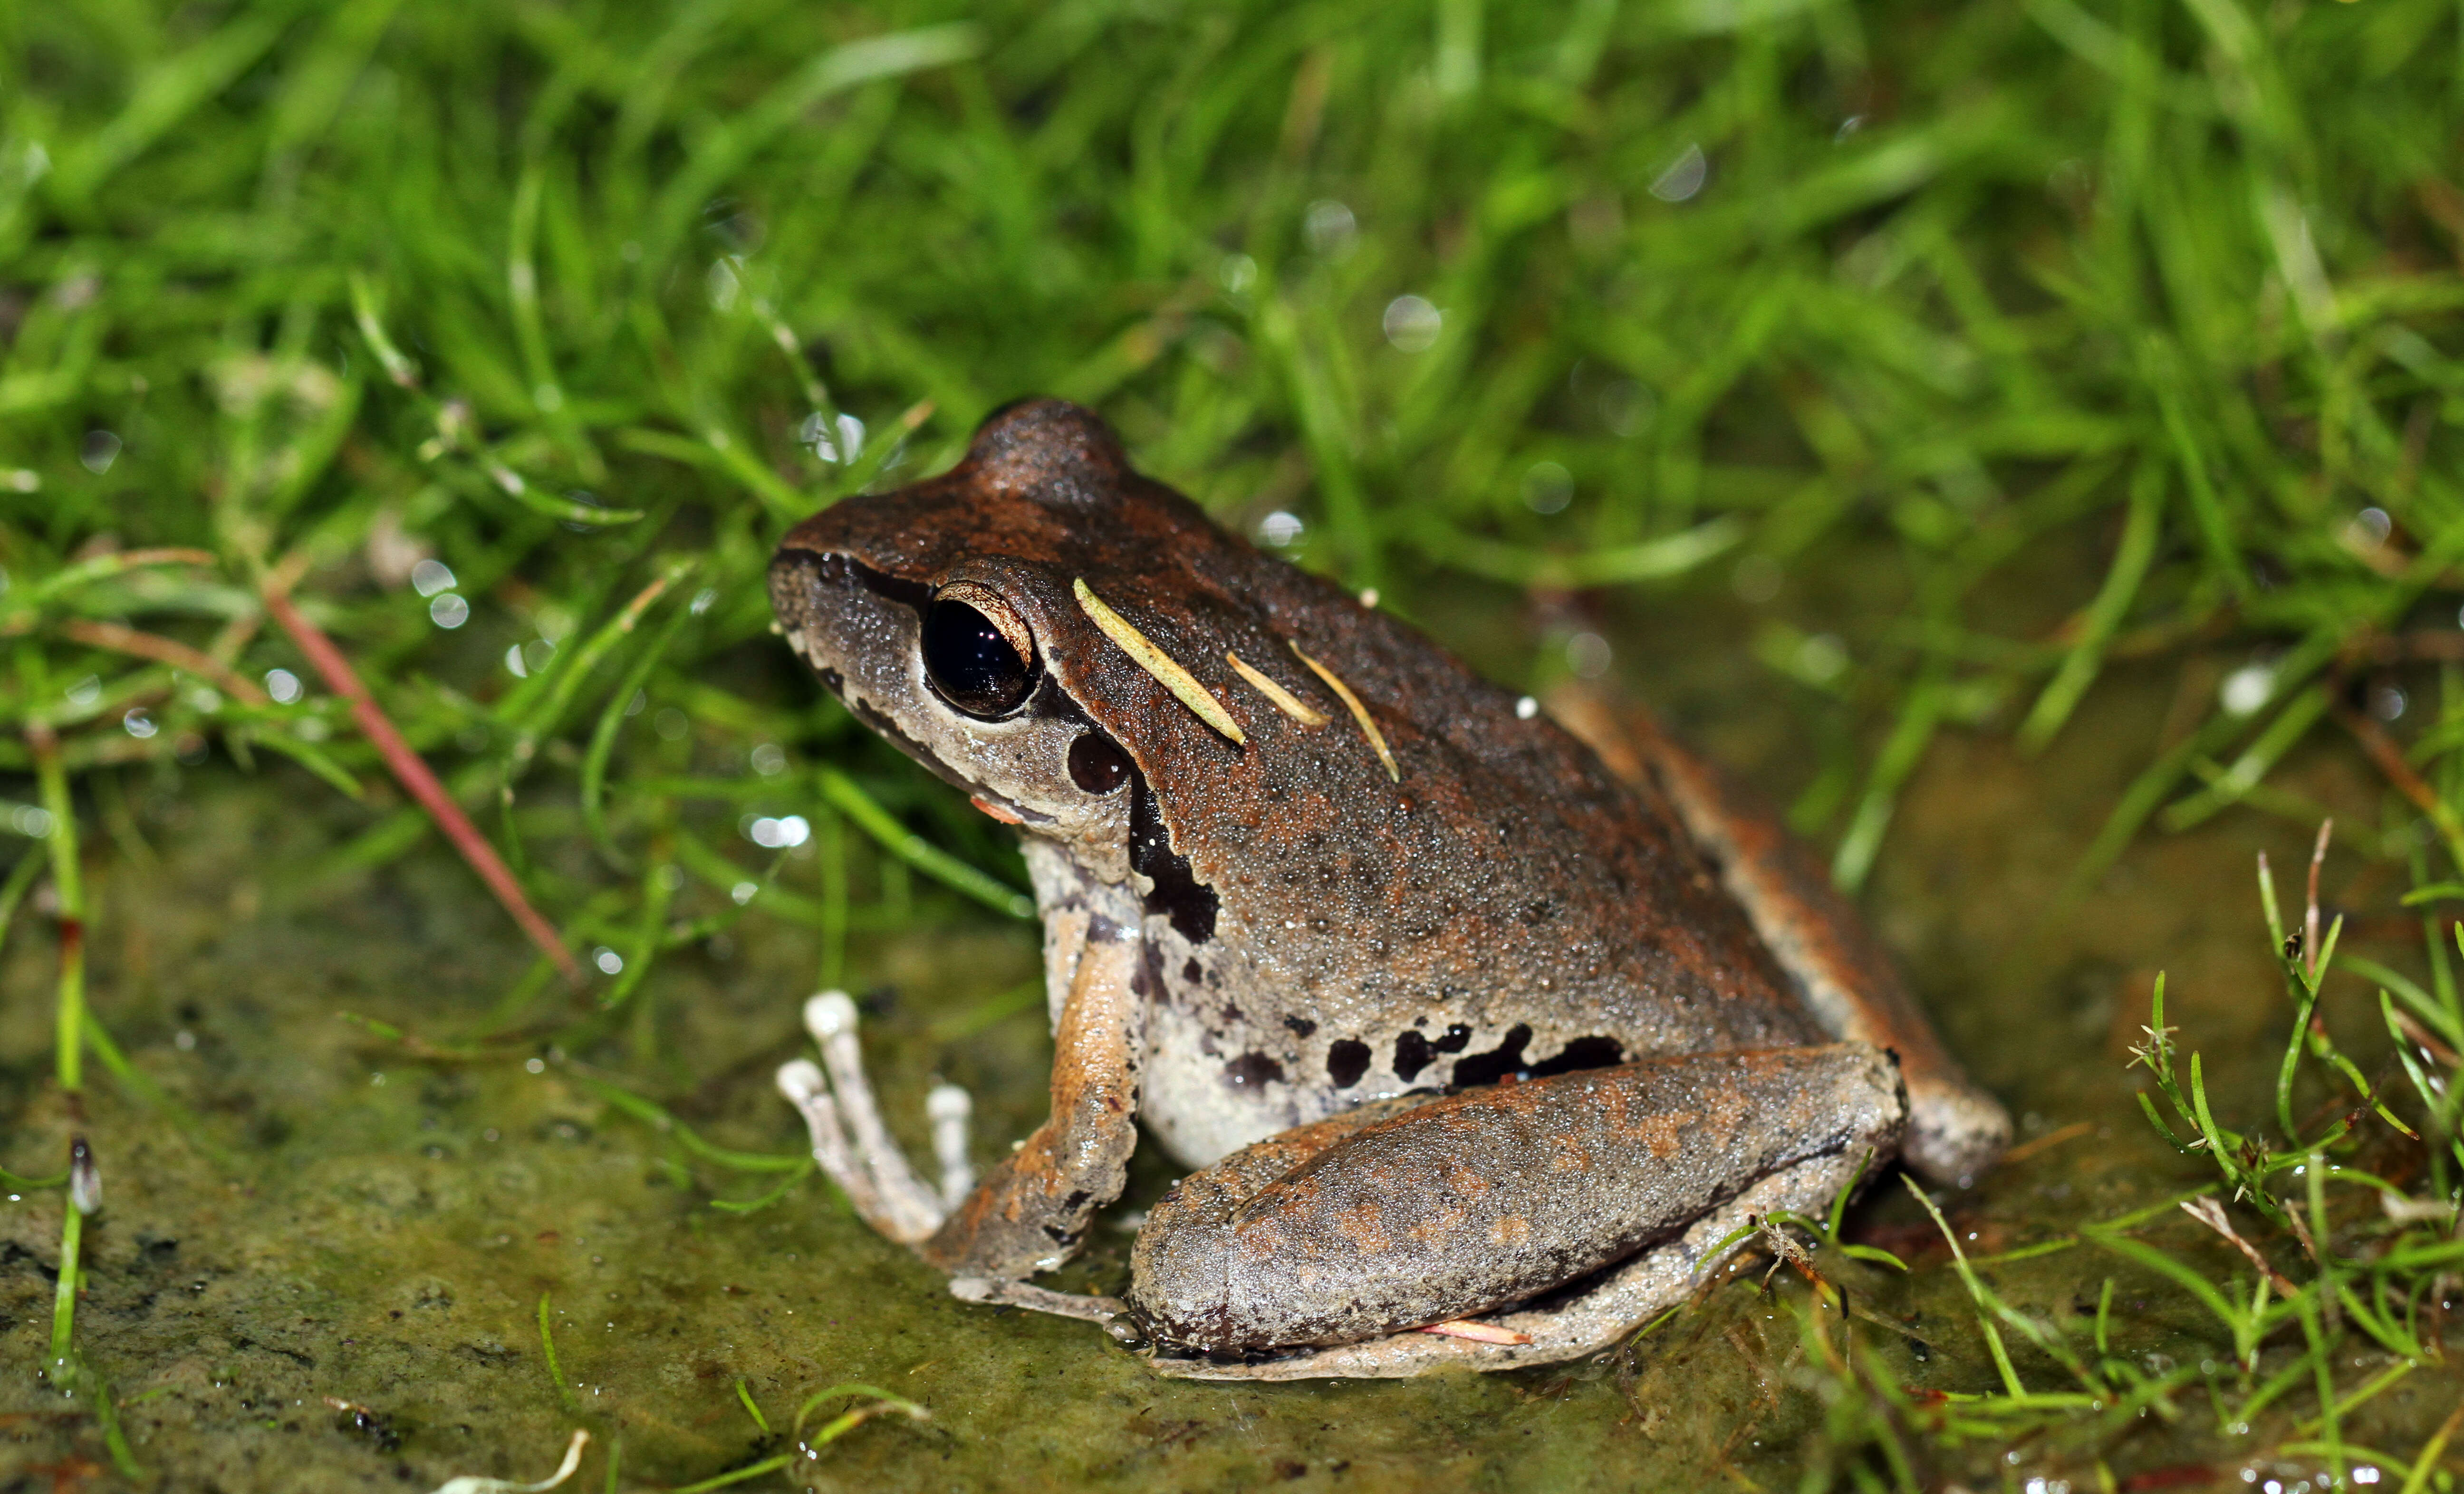 Image of Lesueur's frog